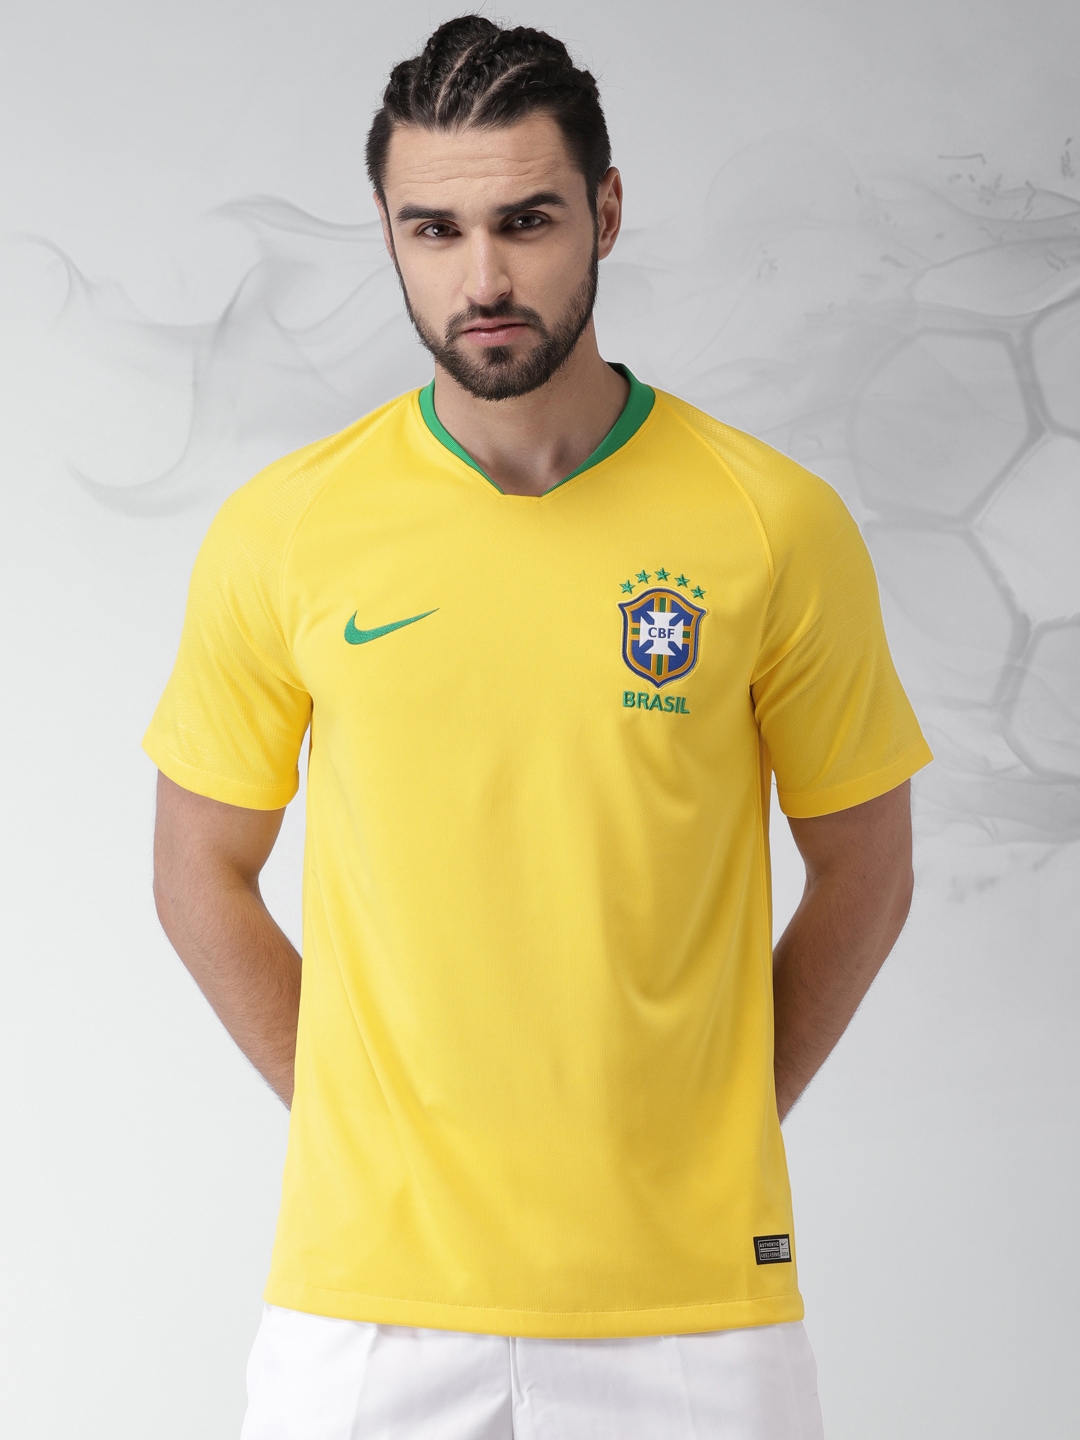 brazil jersey,Save up to 16%,www.ilcascinone.com